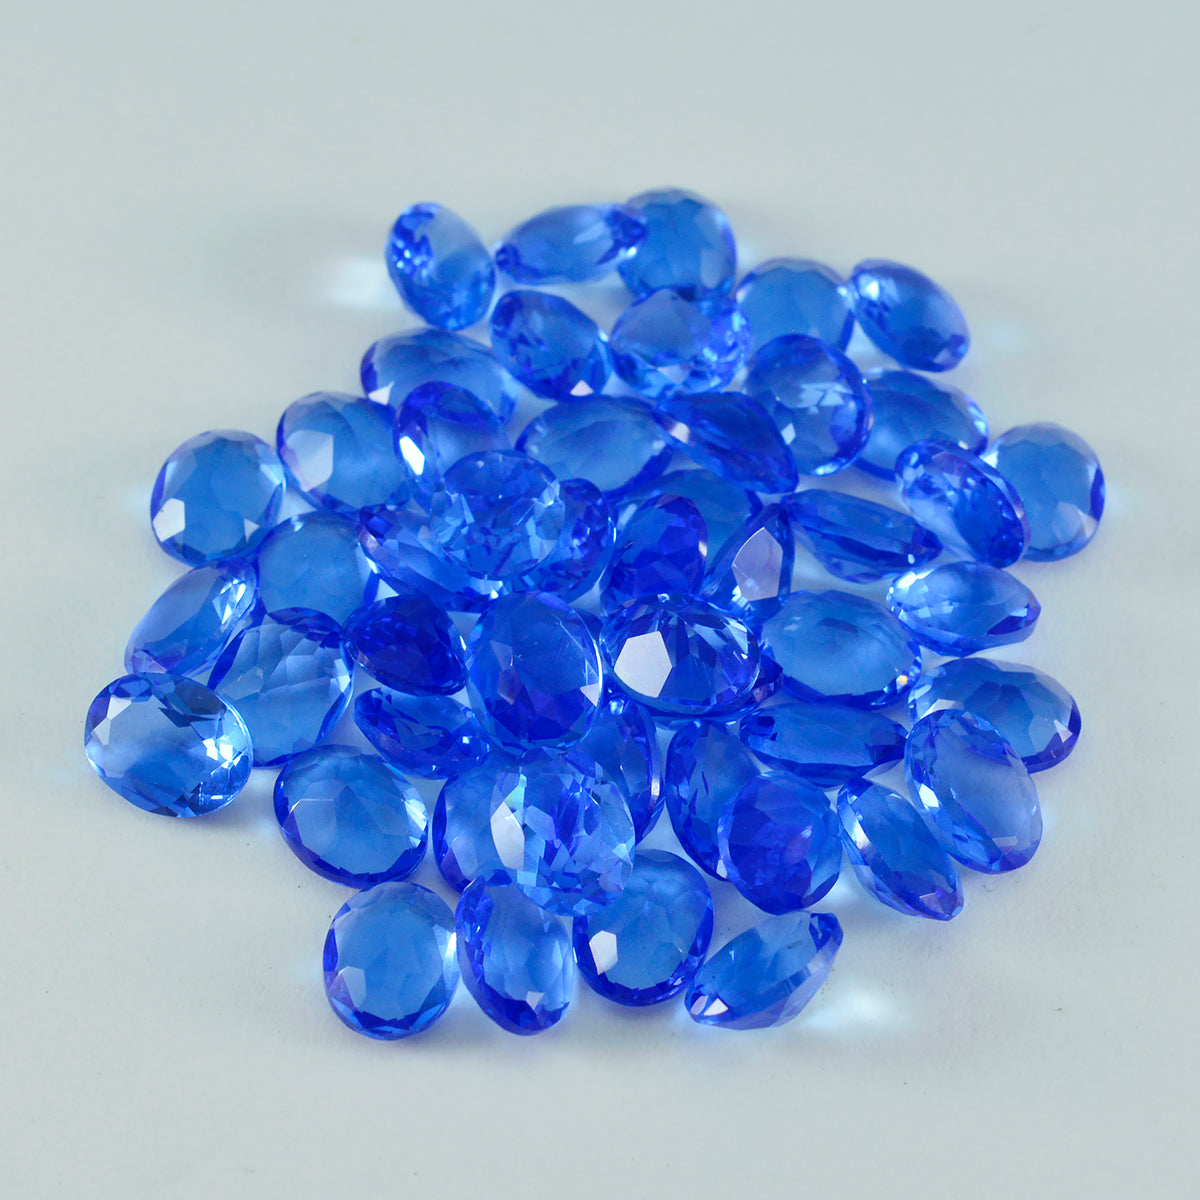 Riyogems 1 pieza zafiro azul CZ facetado 4x6 mm forma ovalada piedra suelta de calidad AAA